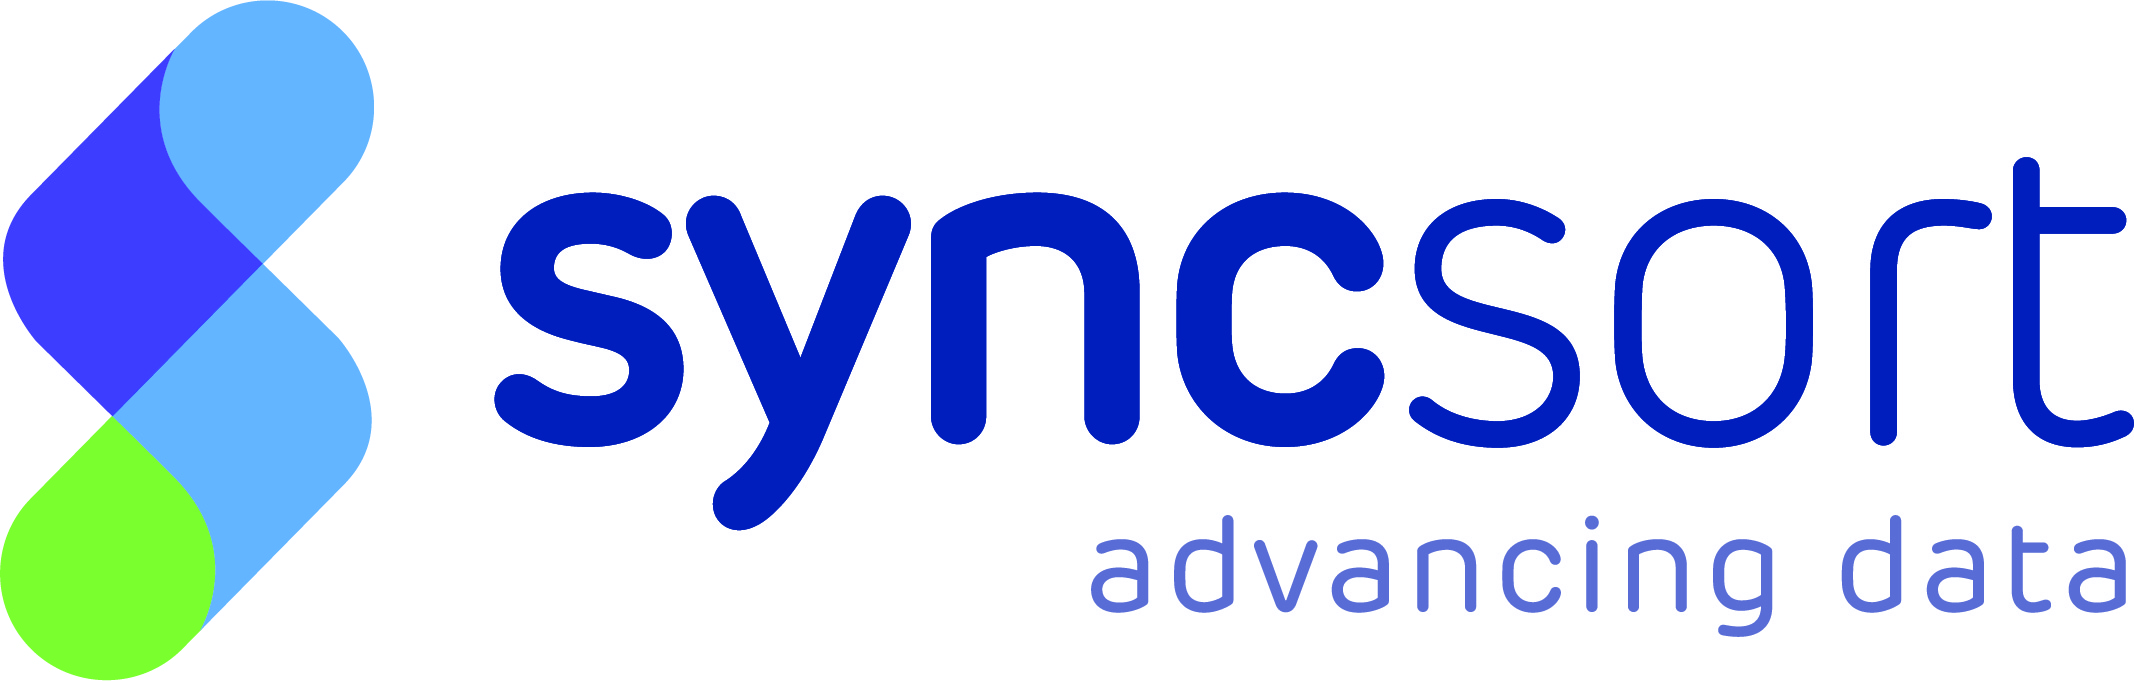 syncsort 2019 logo